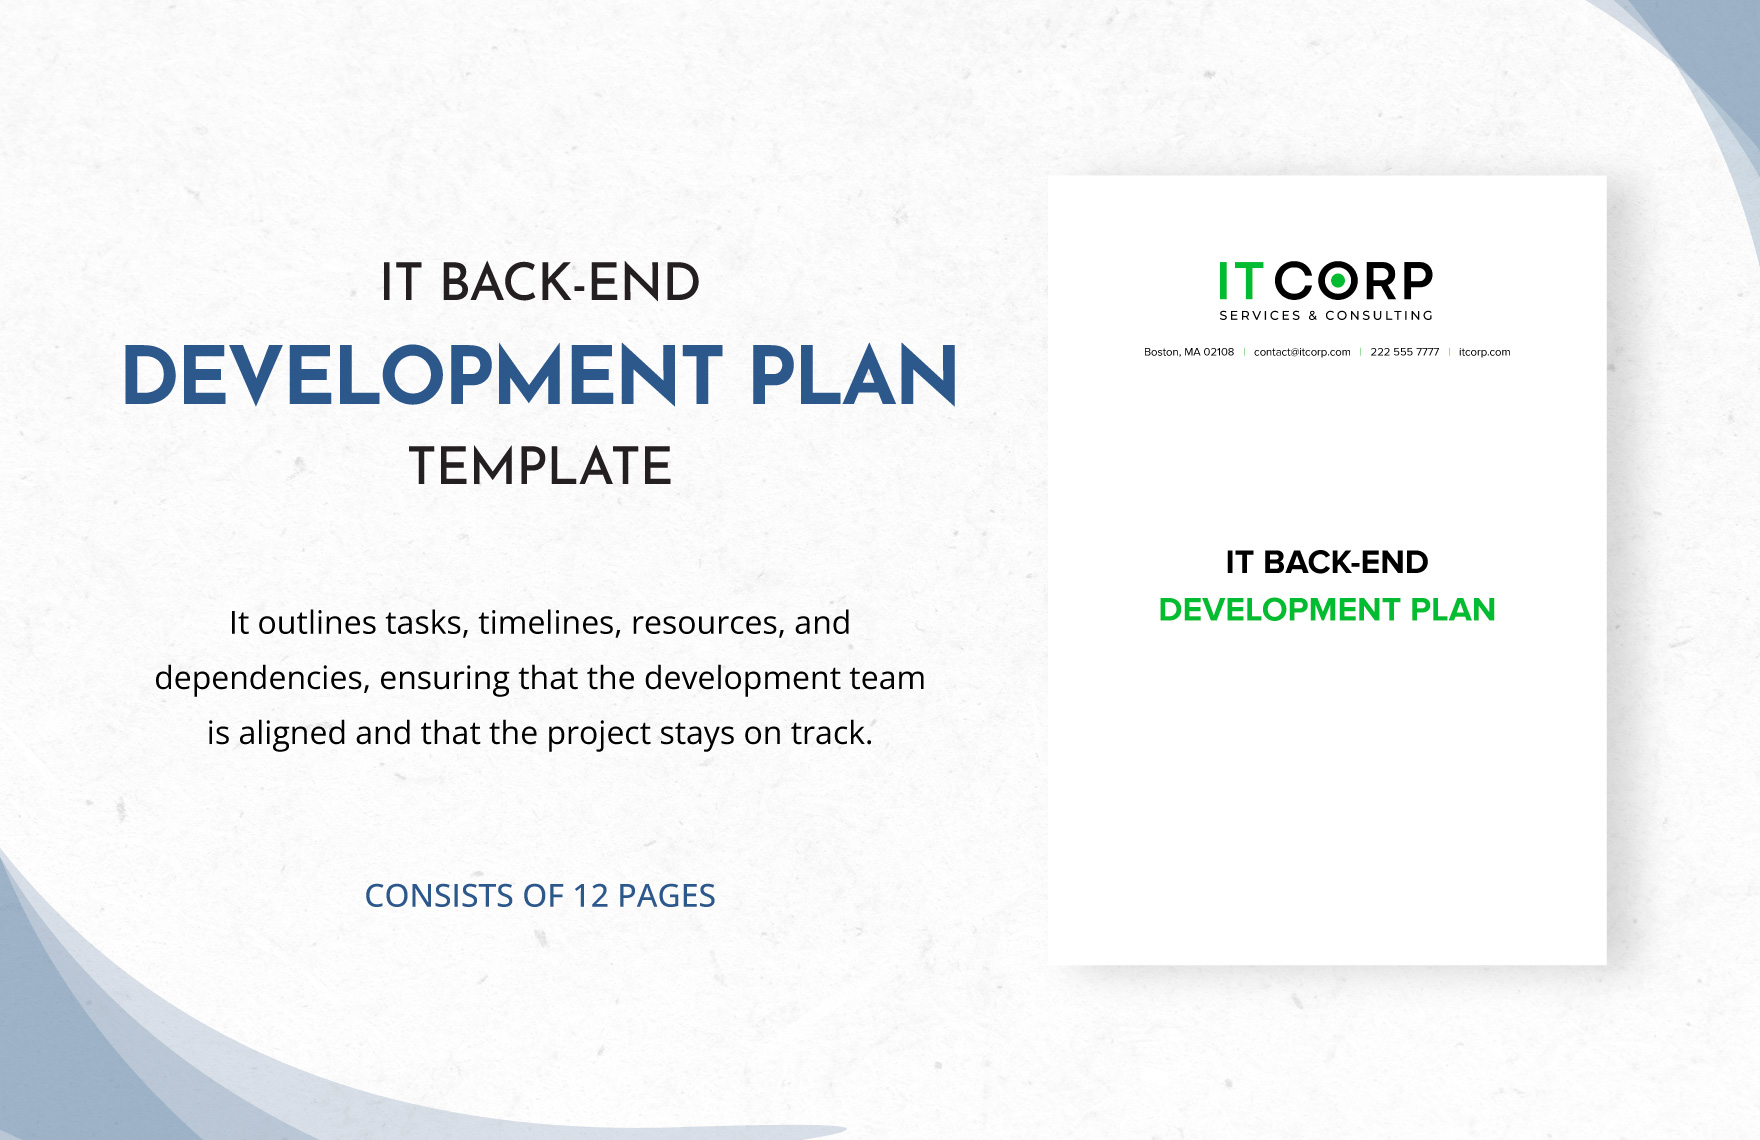 IT Back-End Development Plan Template